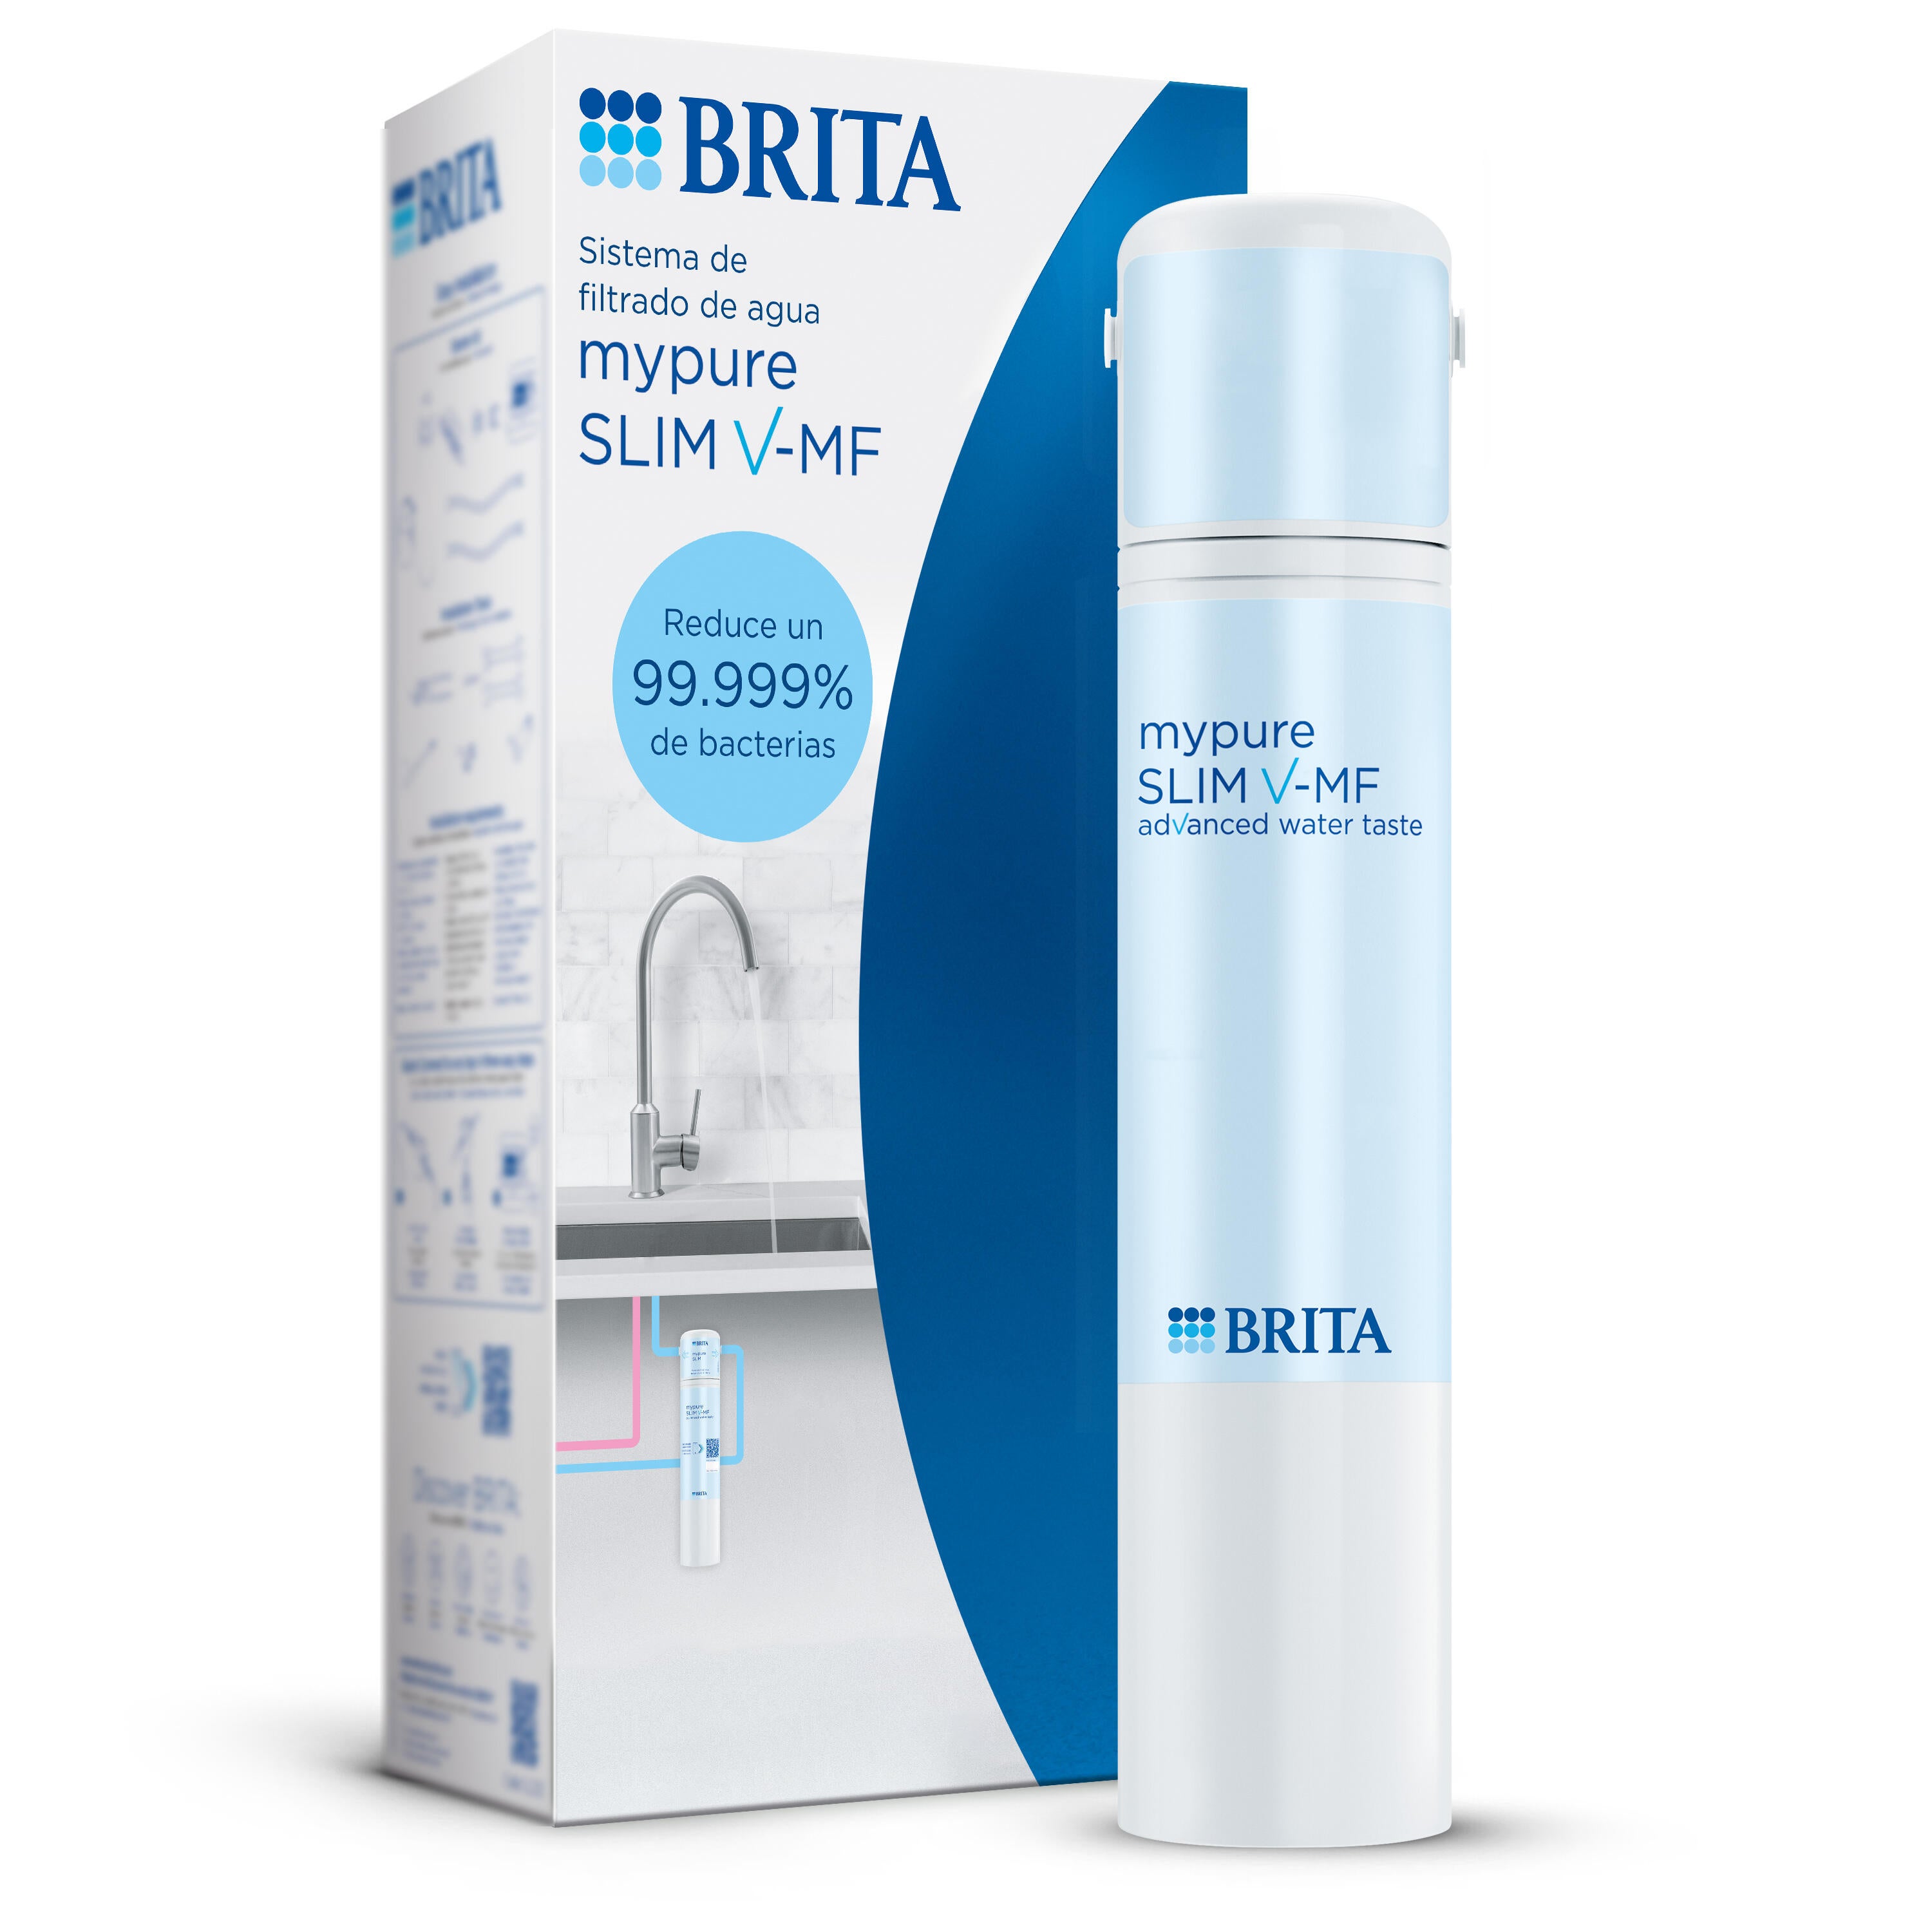 Brita Filtro de agua para fregadero sistema de filtración de agua